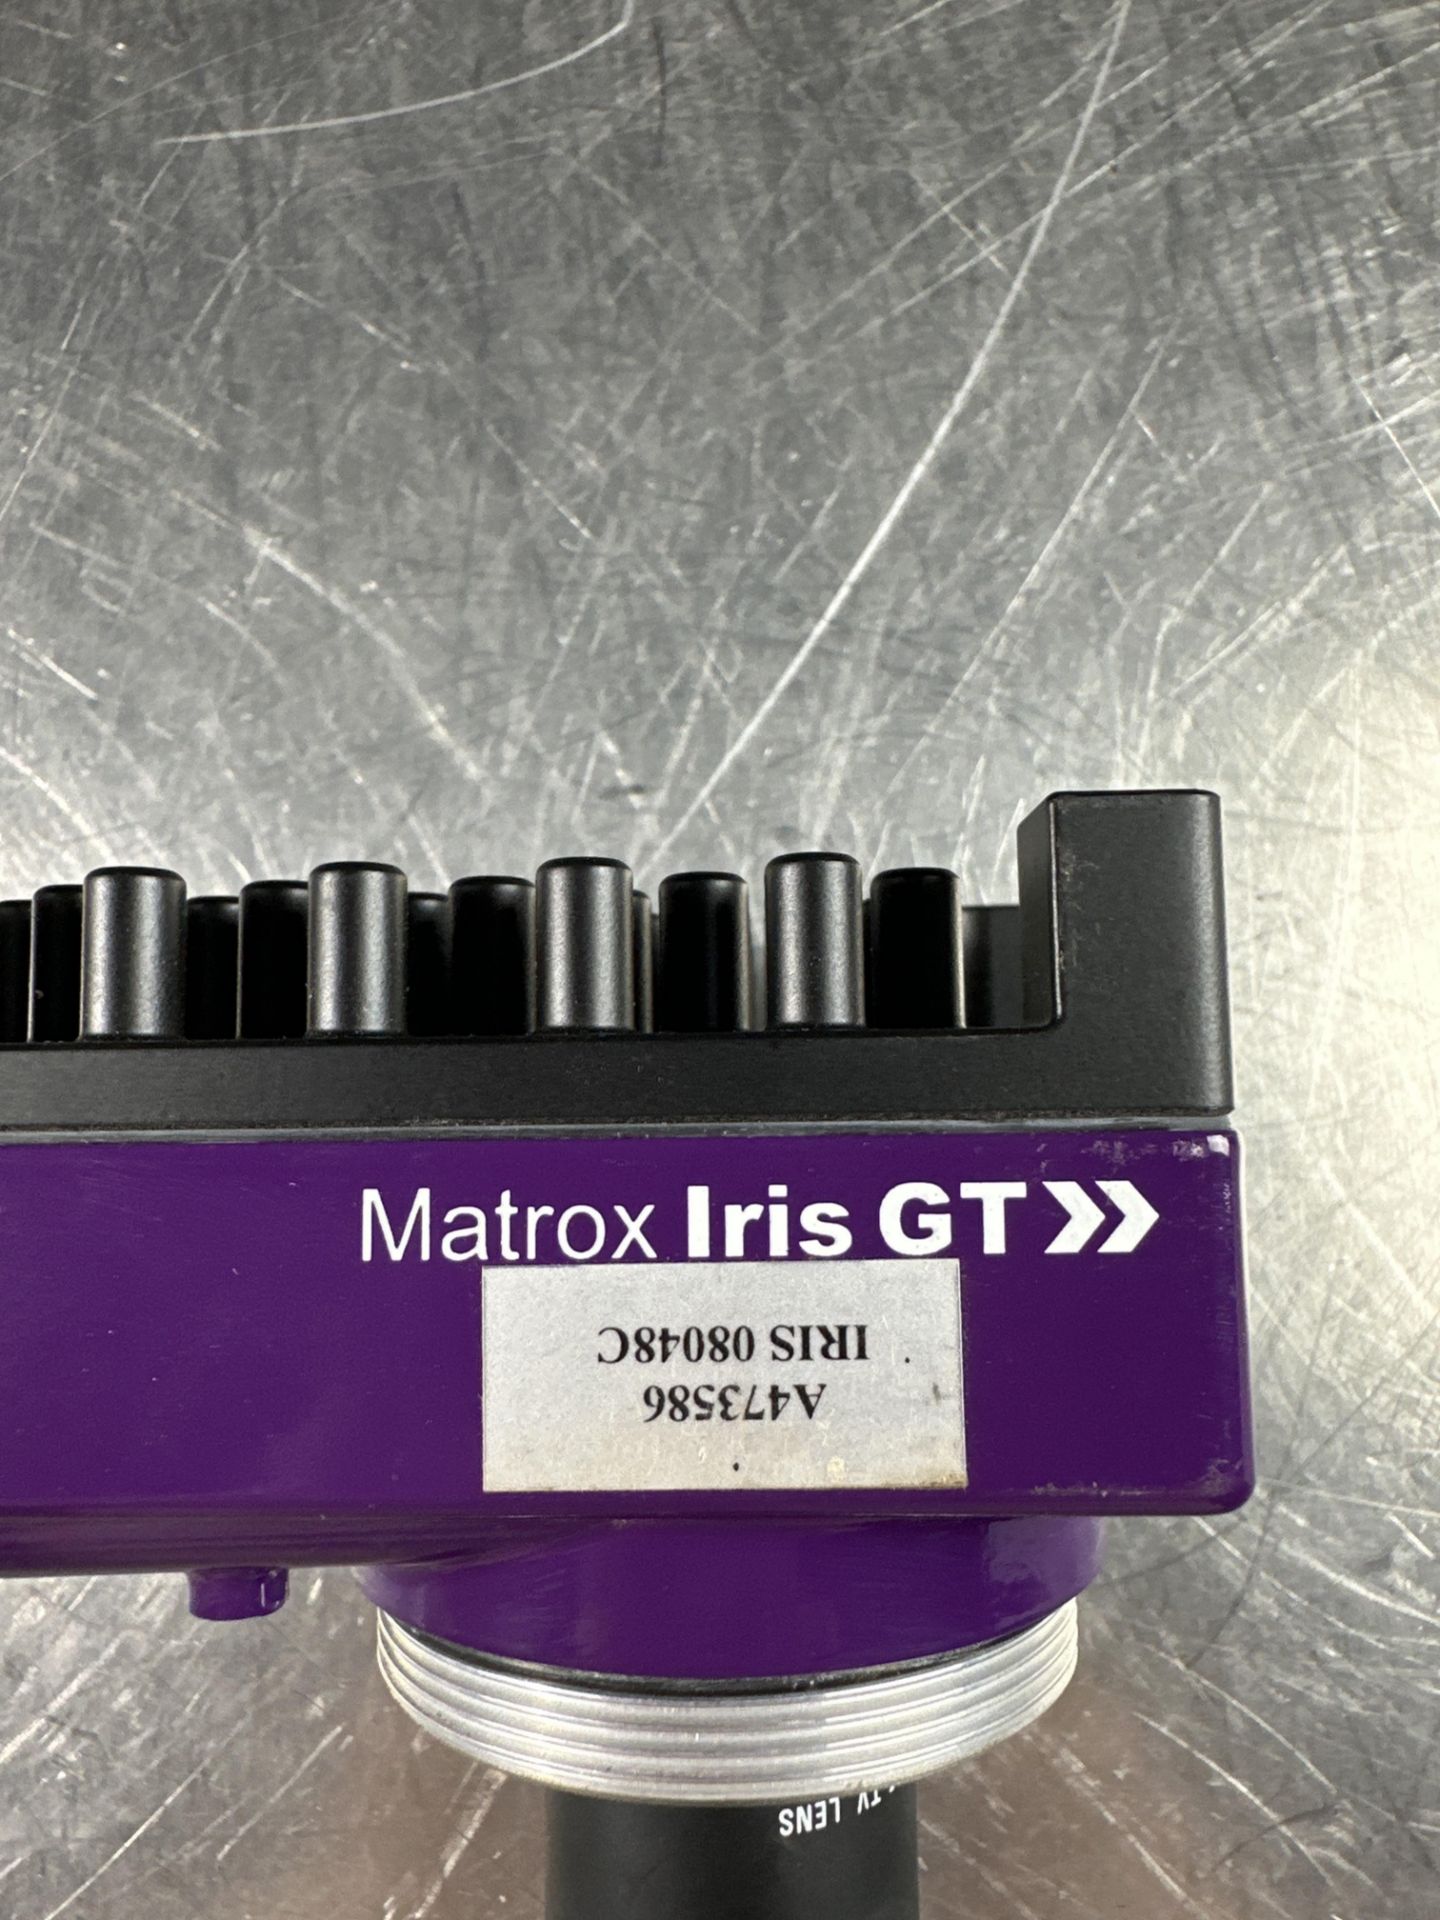 MATROX IRIS GT300/M CAMERA WITH 40MM PENTAX LENS - Image 7 of 7